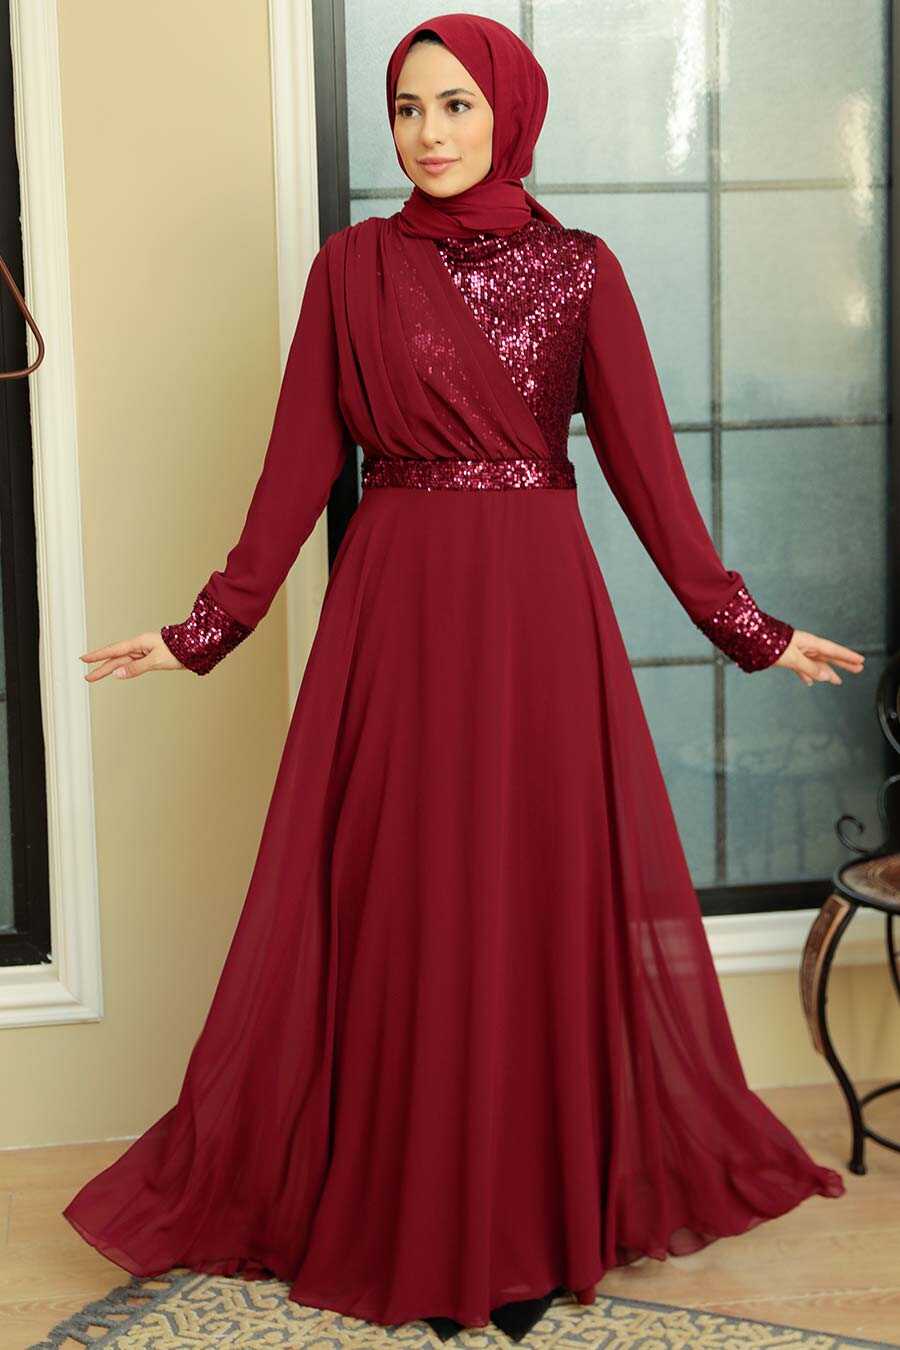  Long Sleeve Claret Red Muslim Bridal Dress 5793BR